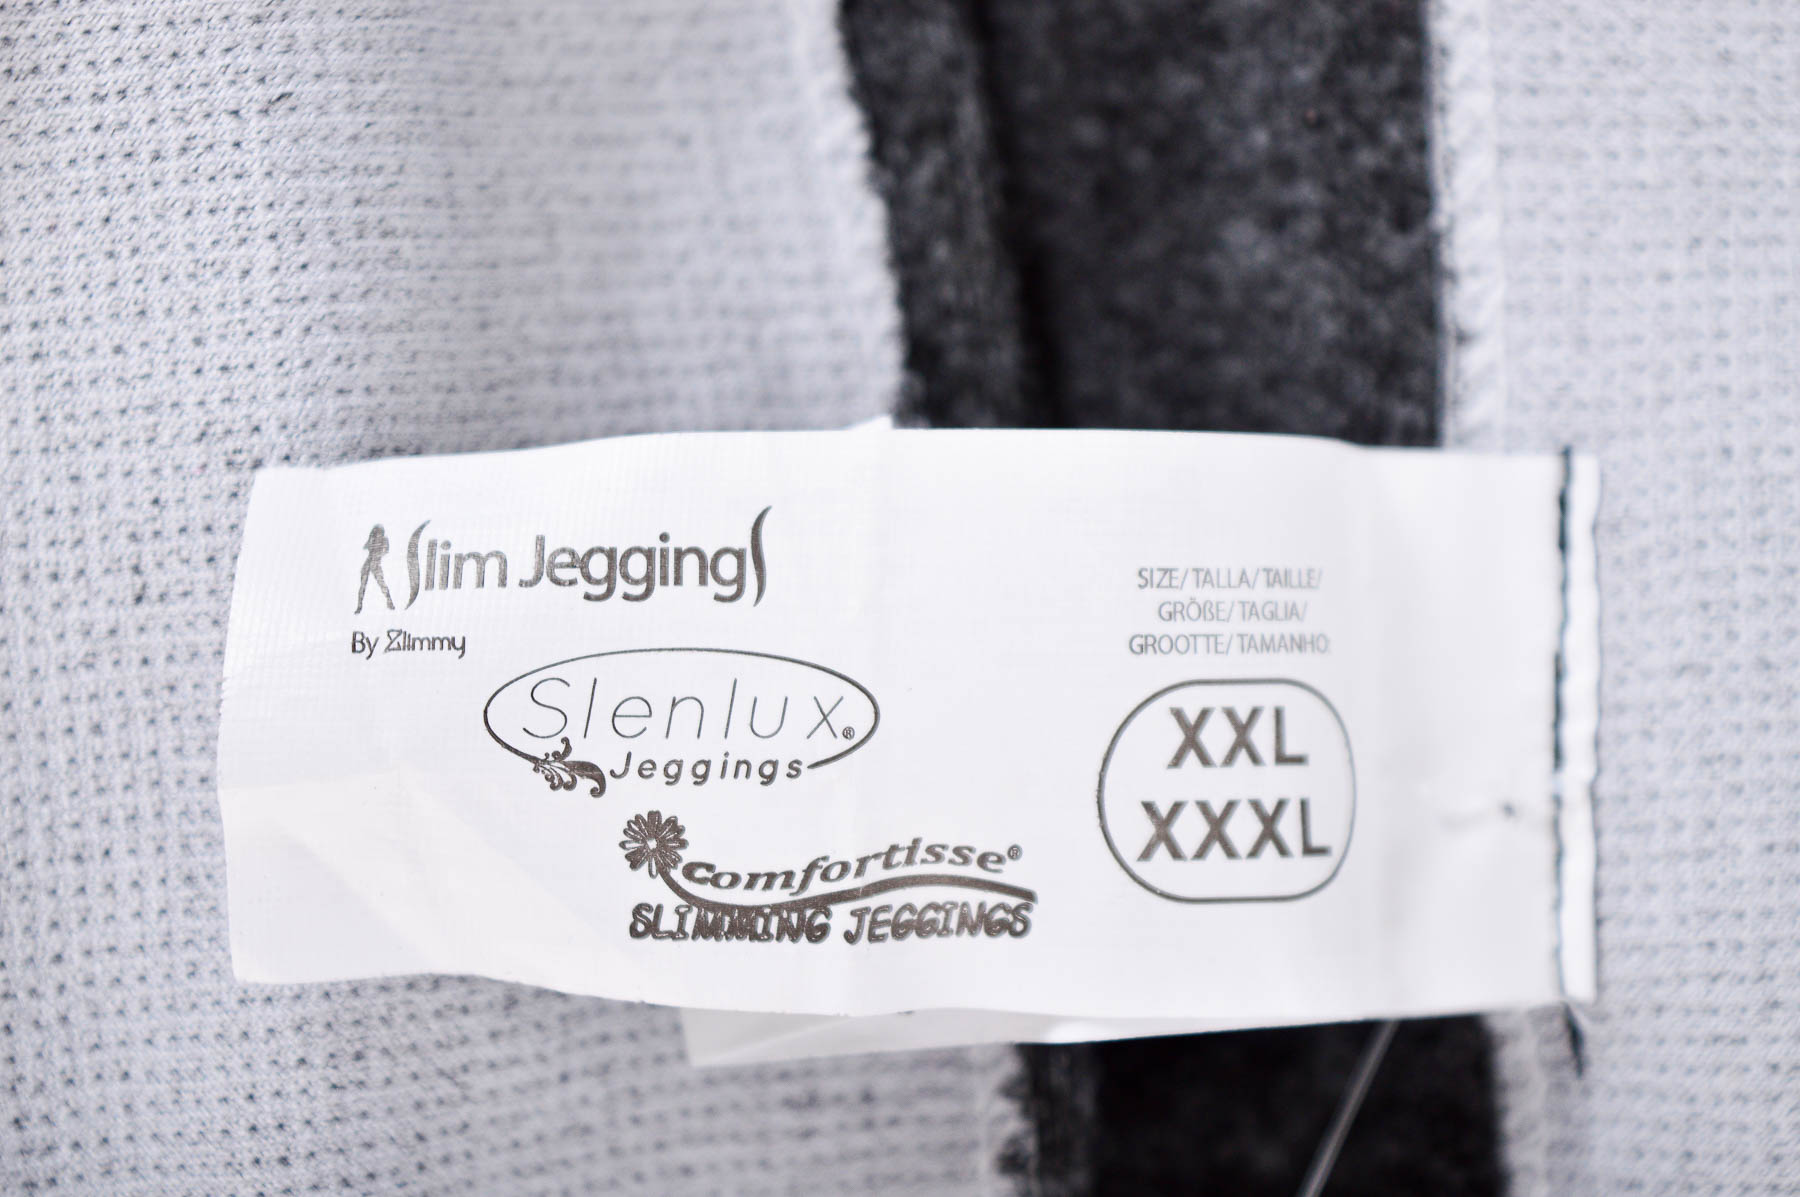 Leggings - Slim Jegging By Zlimmy - 2